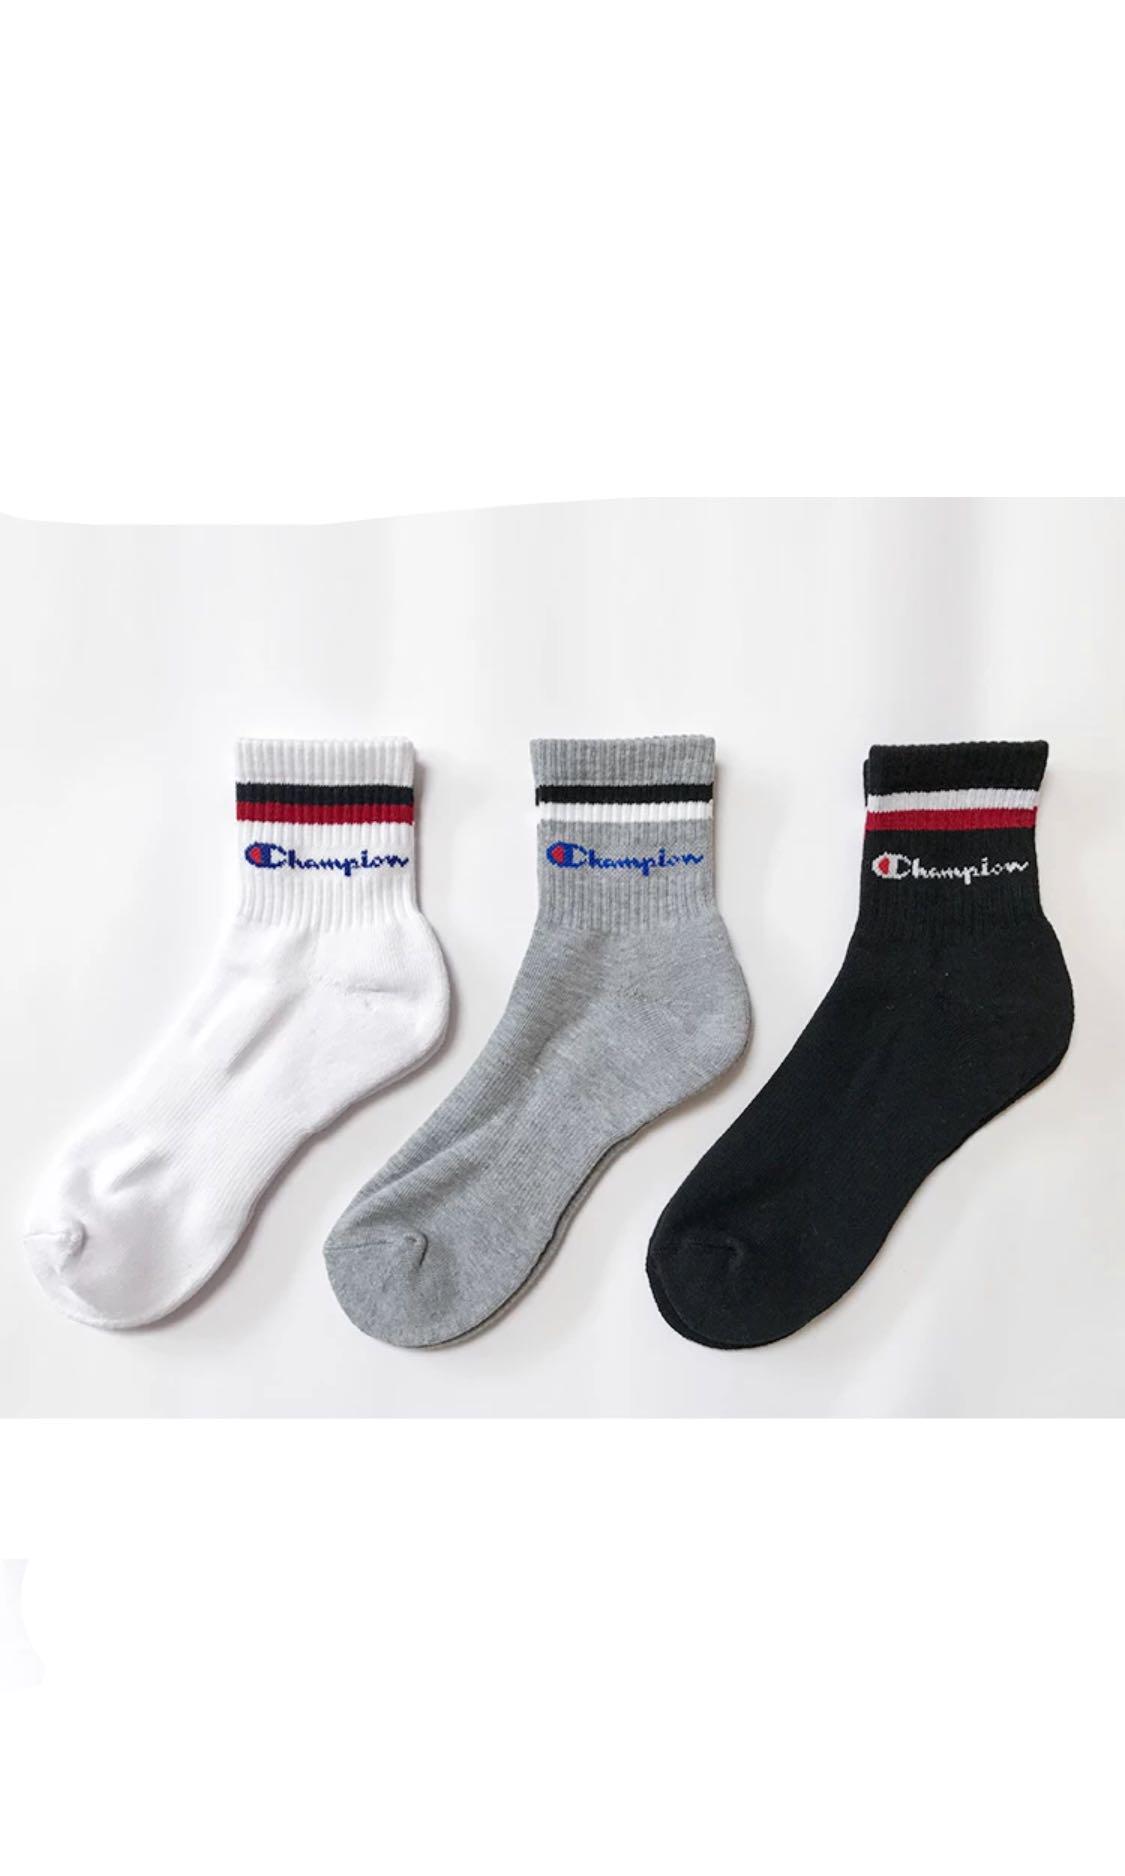 PO champion long socks, Men's Fashion 